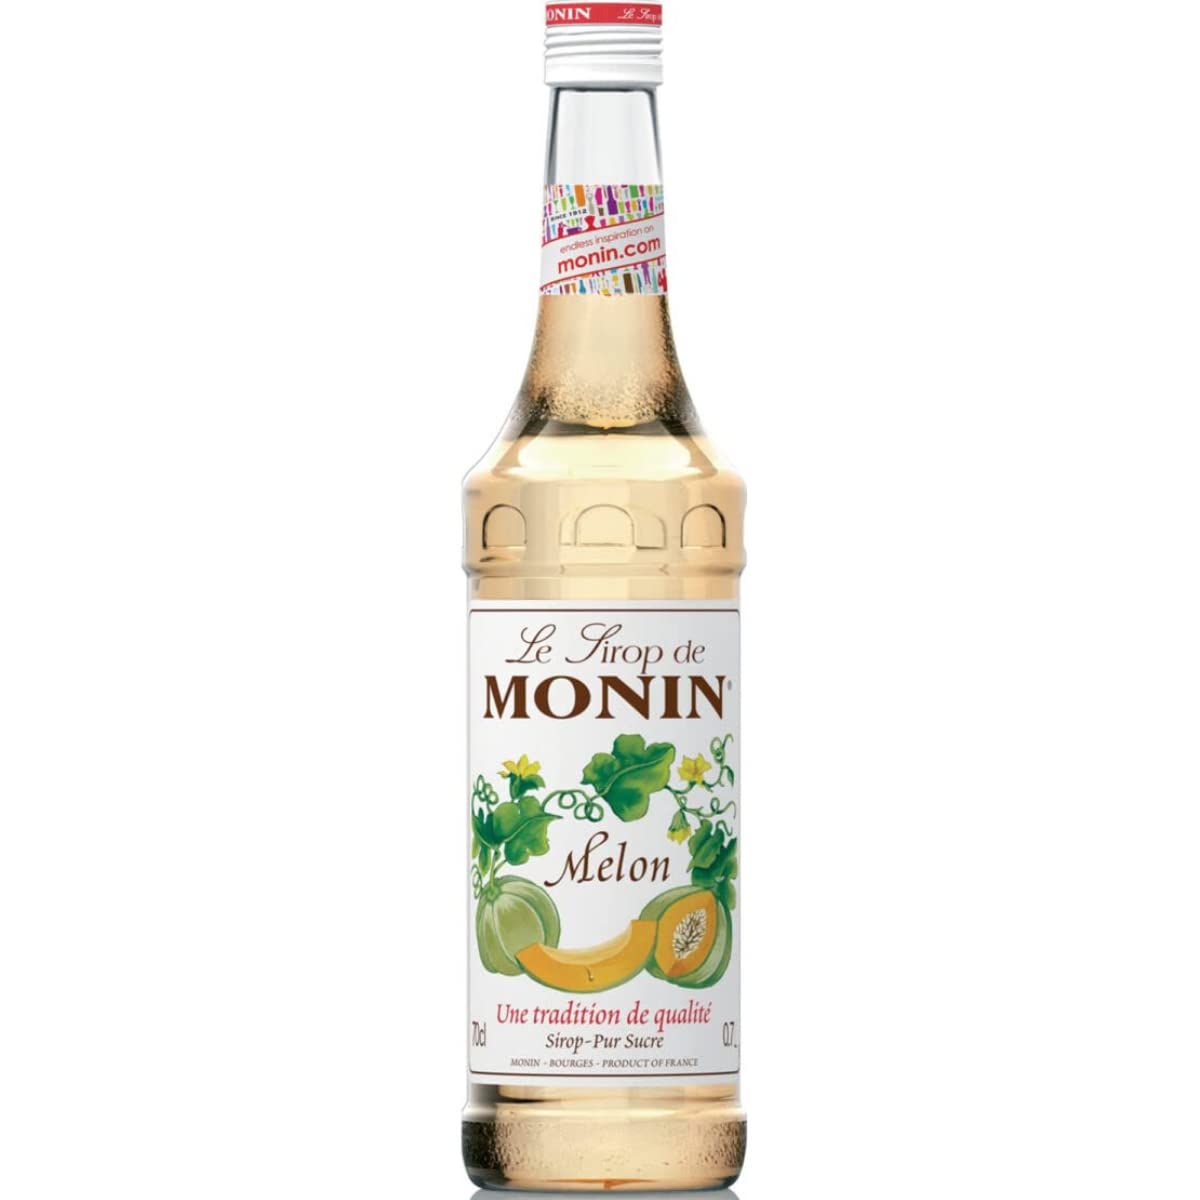 Monin Melon Syrup Image